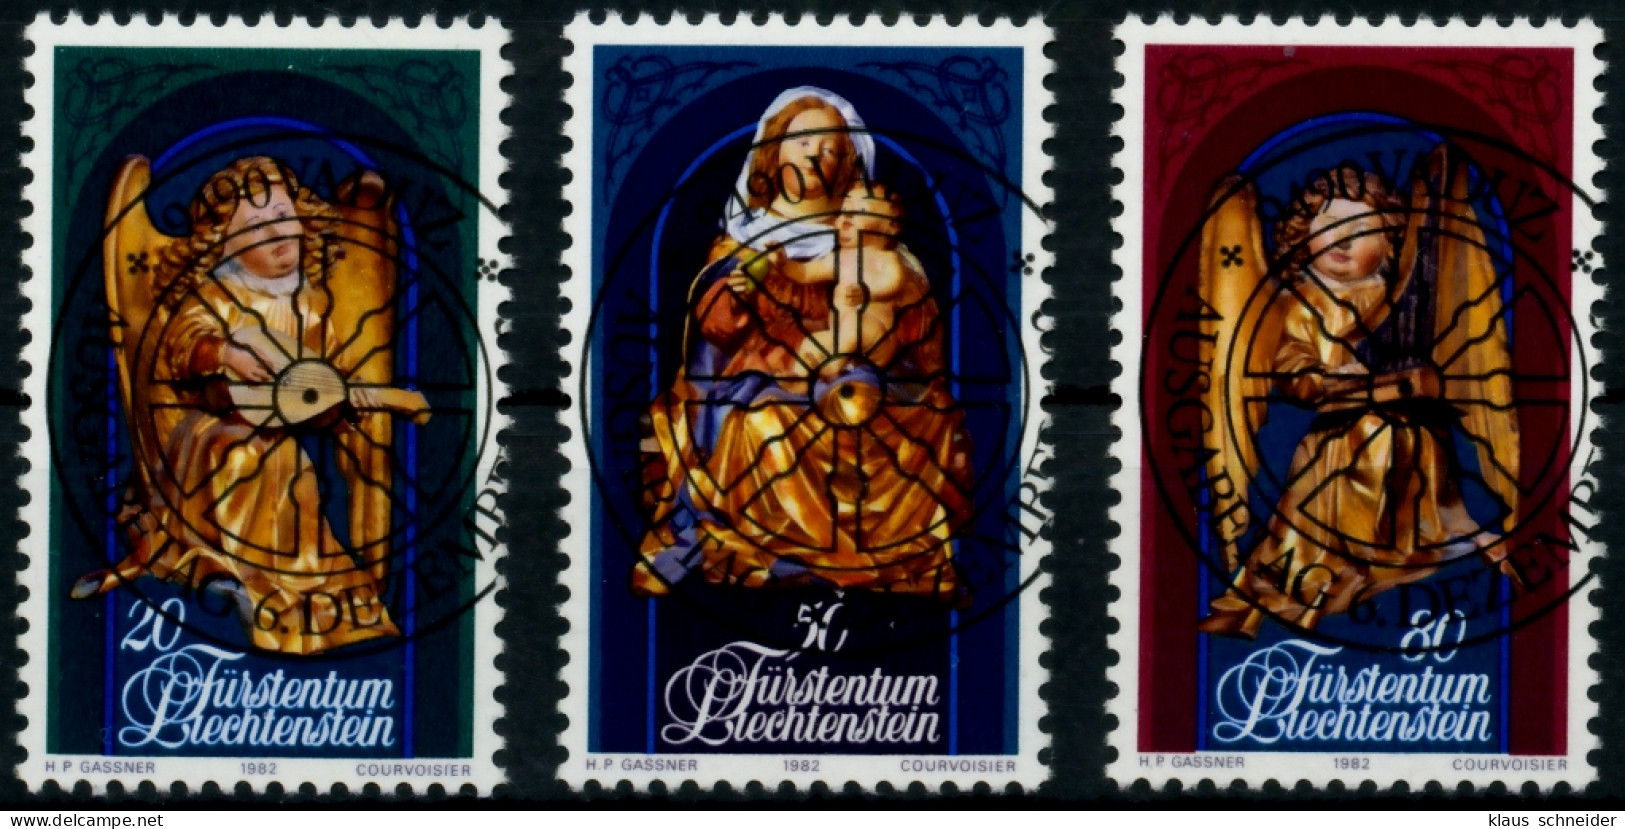 LIECHTENSTEIN 1982 Nr 813-815 Zentrisch Gestempelt X6E6A02 - Used Stamps